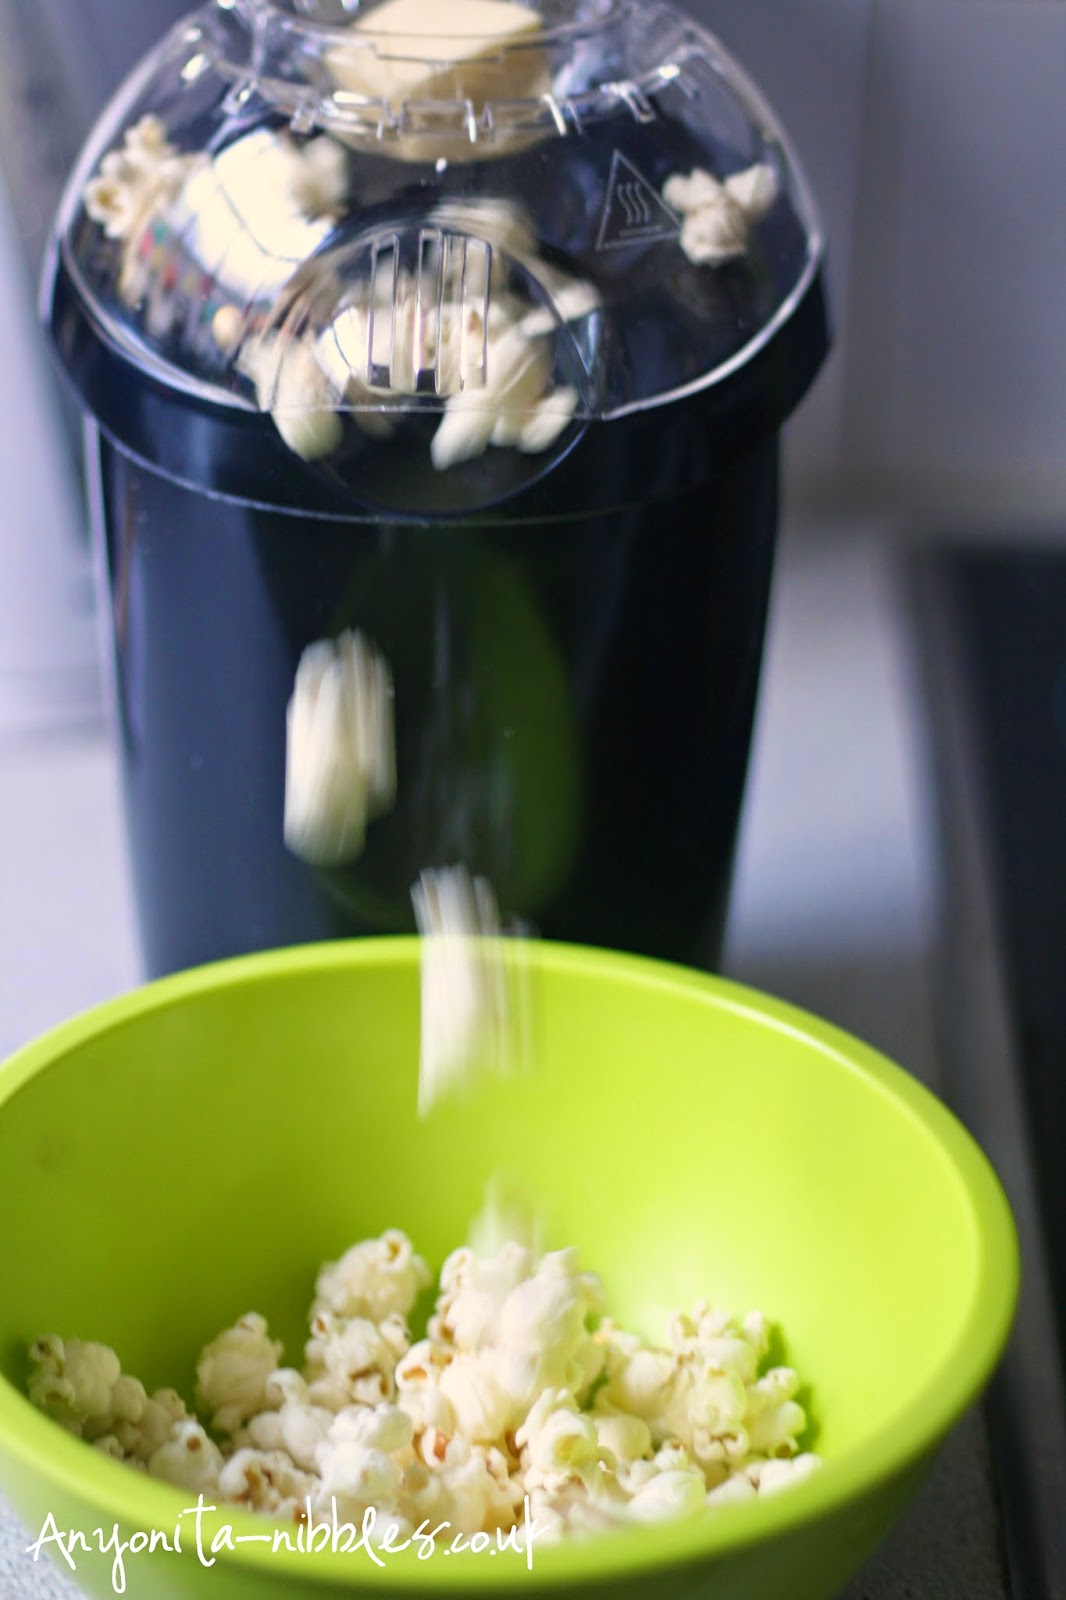 Hot air popcorn making in action from Anyonita-nibbles.co.uk